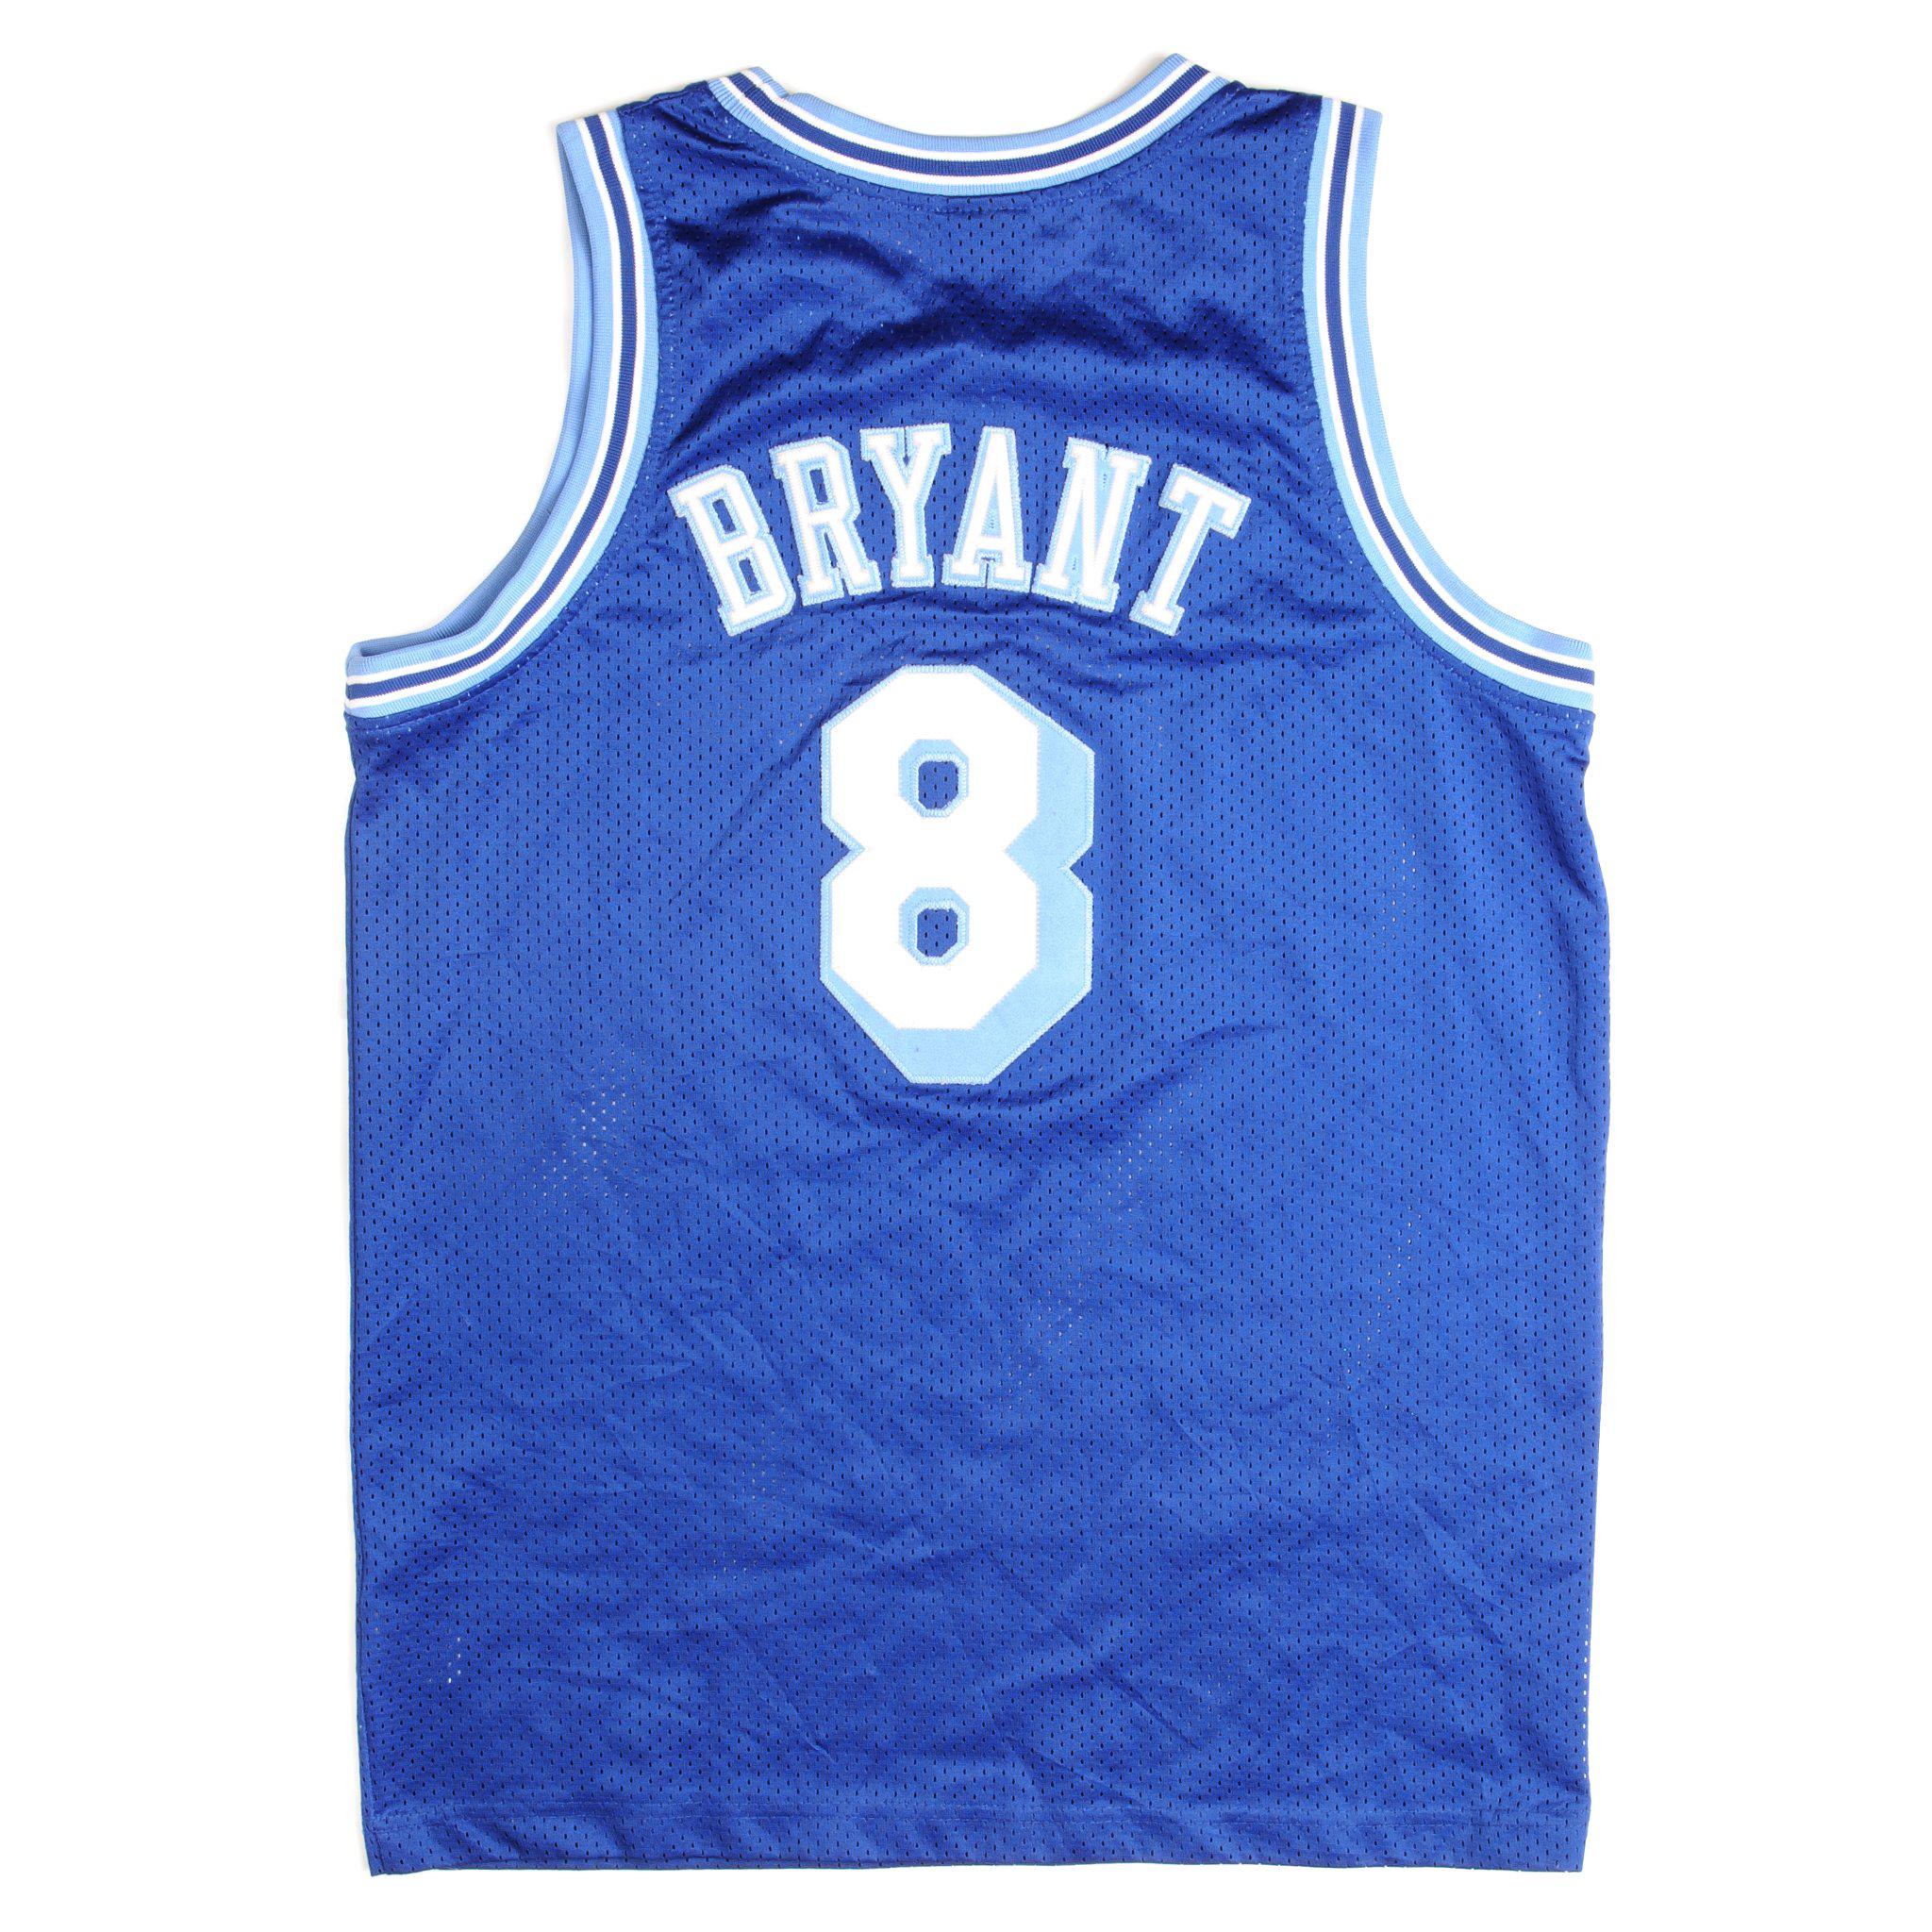 Los Angeles Lakers #8 Kobe Bryant Retro NBA Basketball Jersey